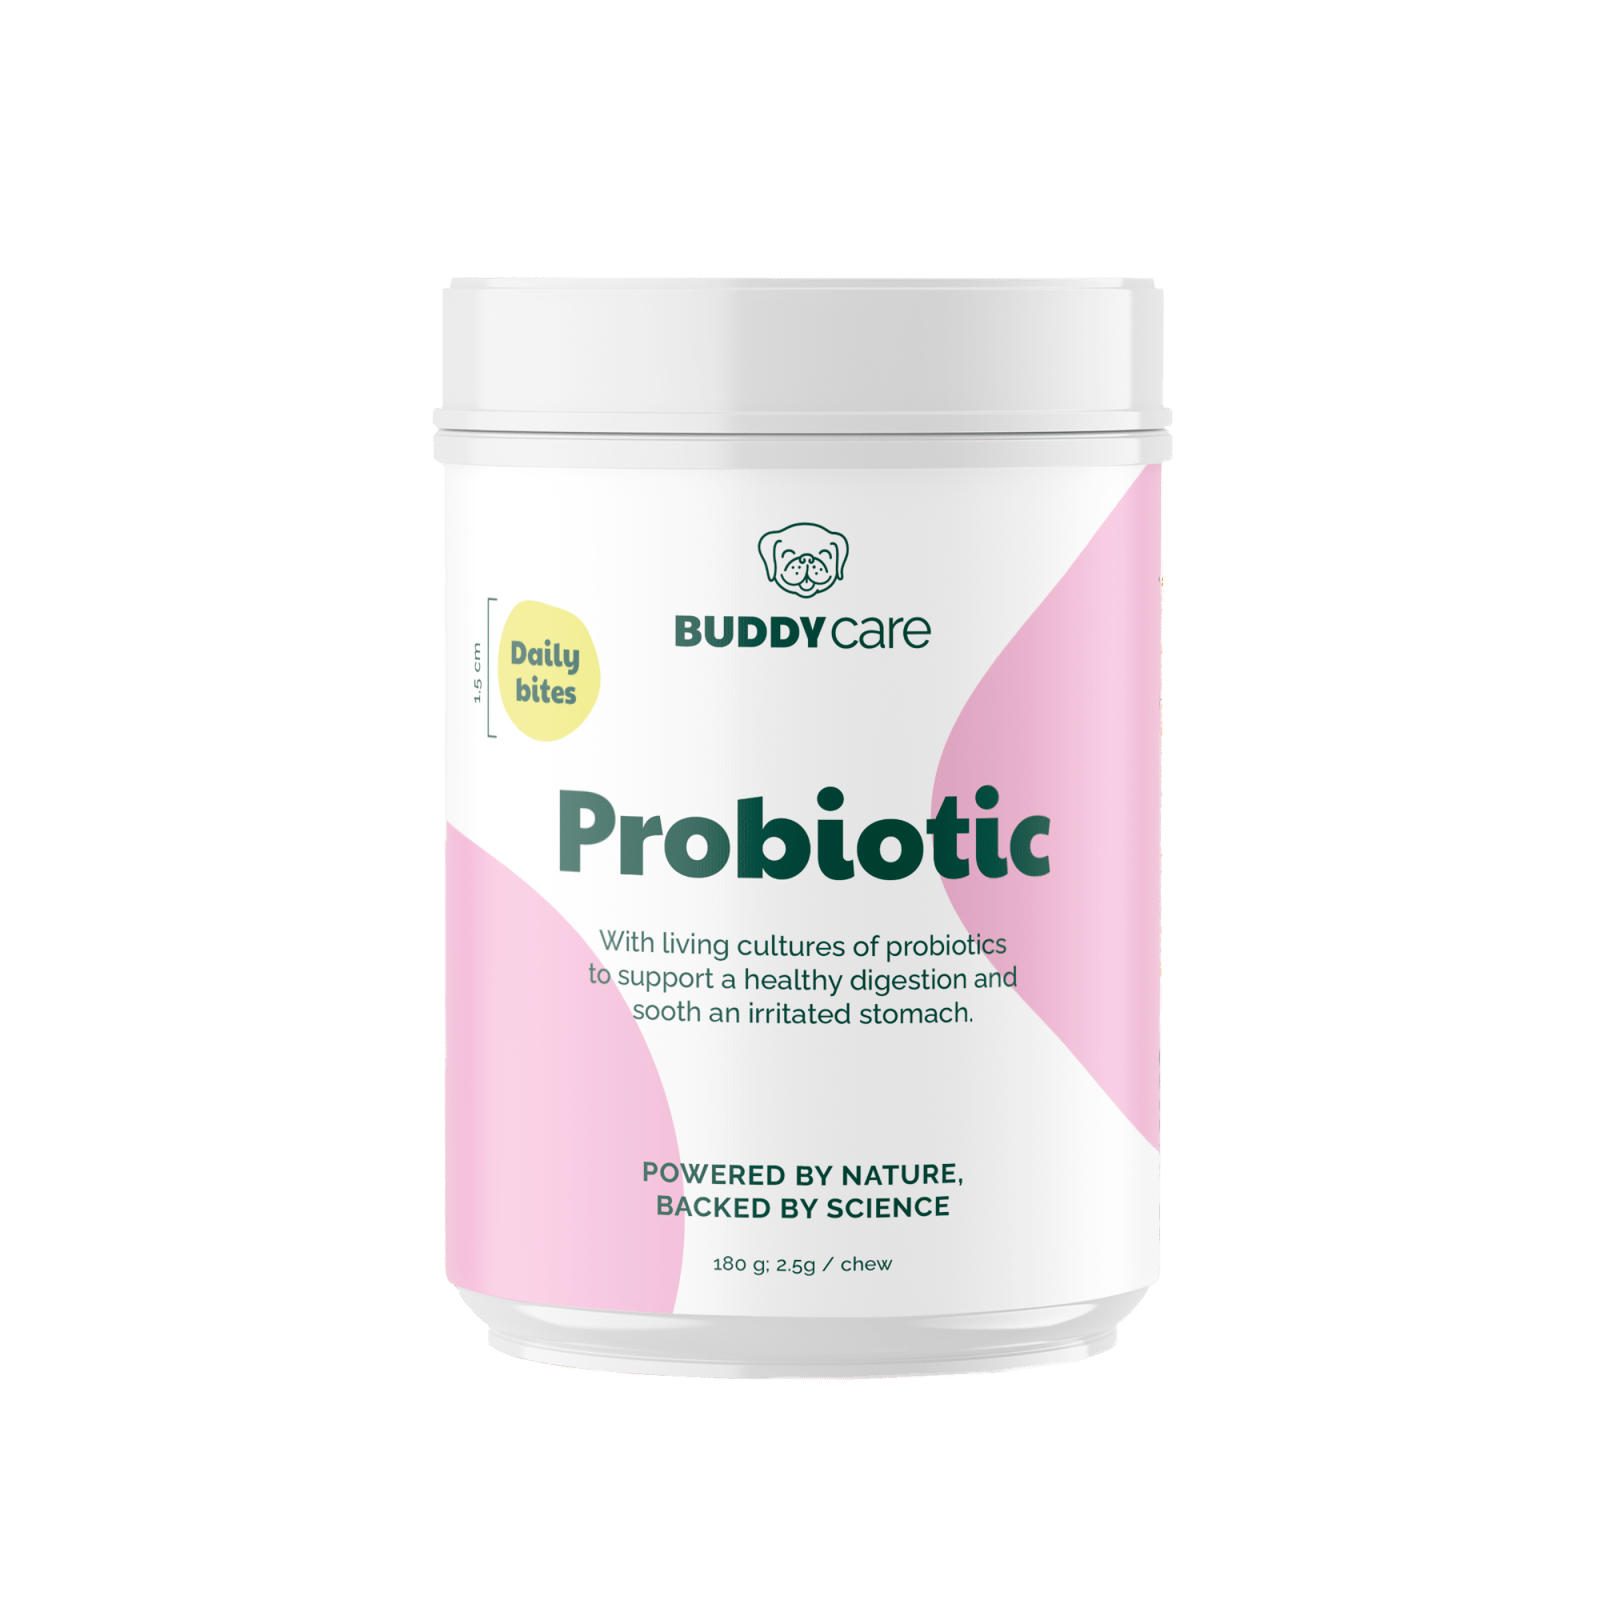 BUDDY Care Probiotic 180g